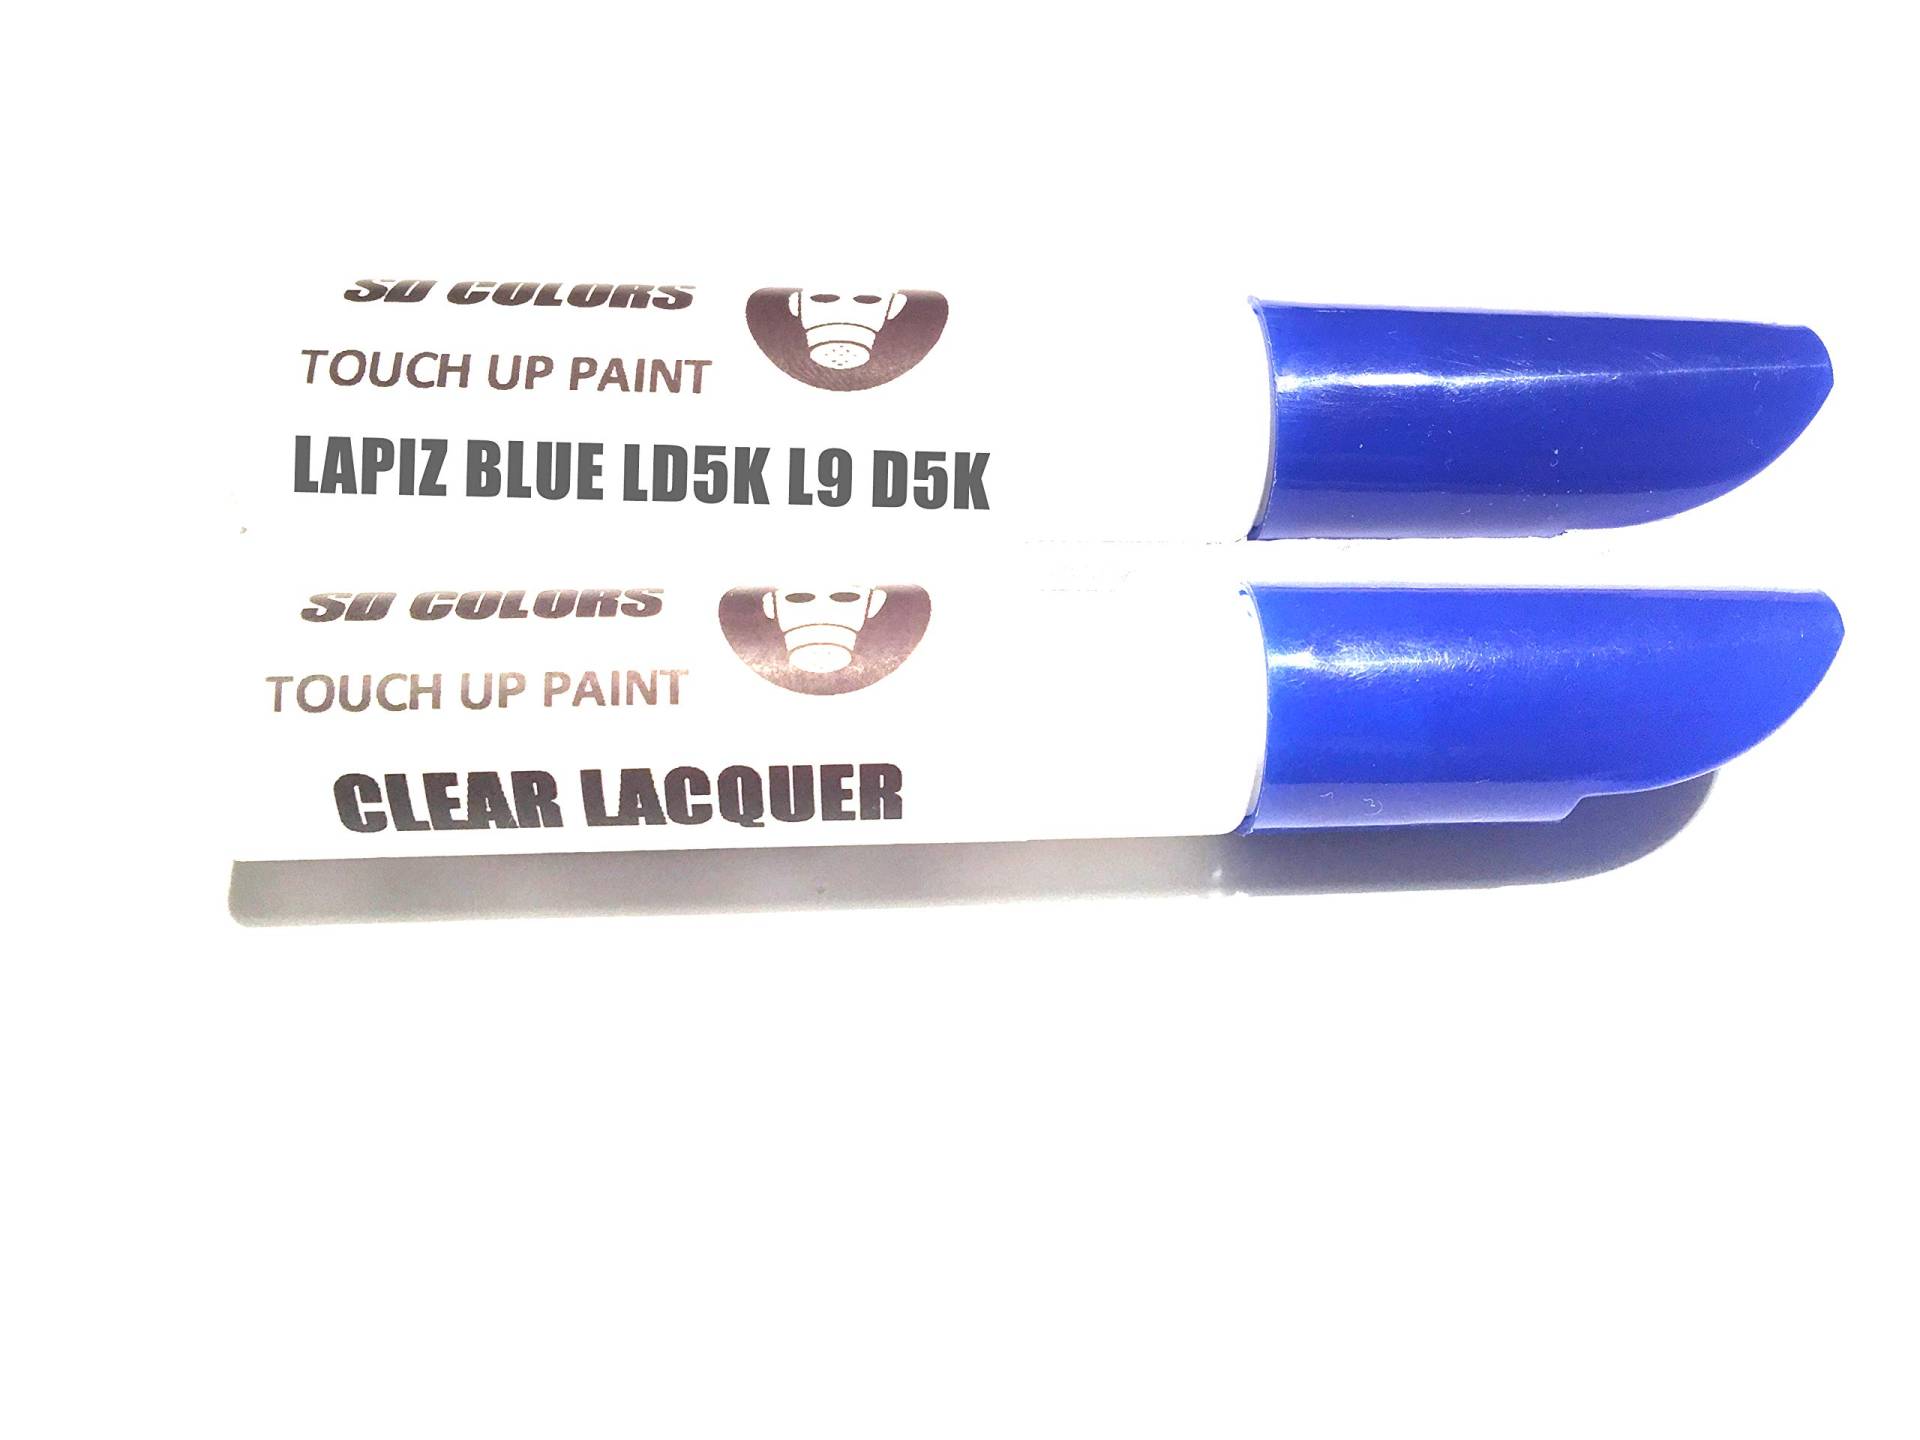 SD COLORS Lapiz Blue LD5K L9 D5K Lackstift-Reparaturset, 12 ml, Pinsel mit Kratzabsplitterung, Farbcode LD5K L9 D5K Lapizblau (Lack + Lack) von SD COLORS